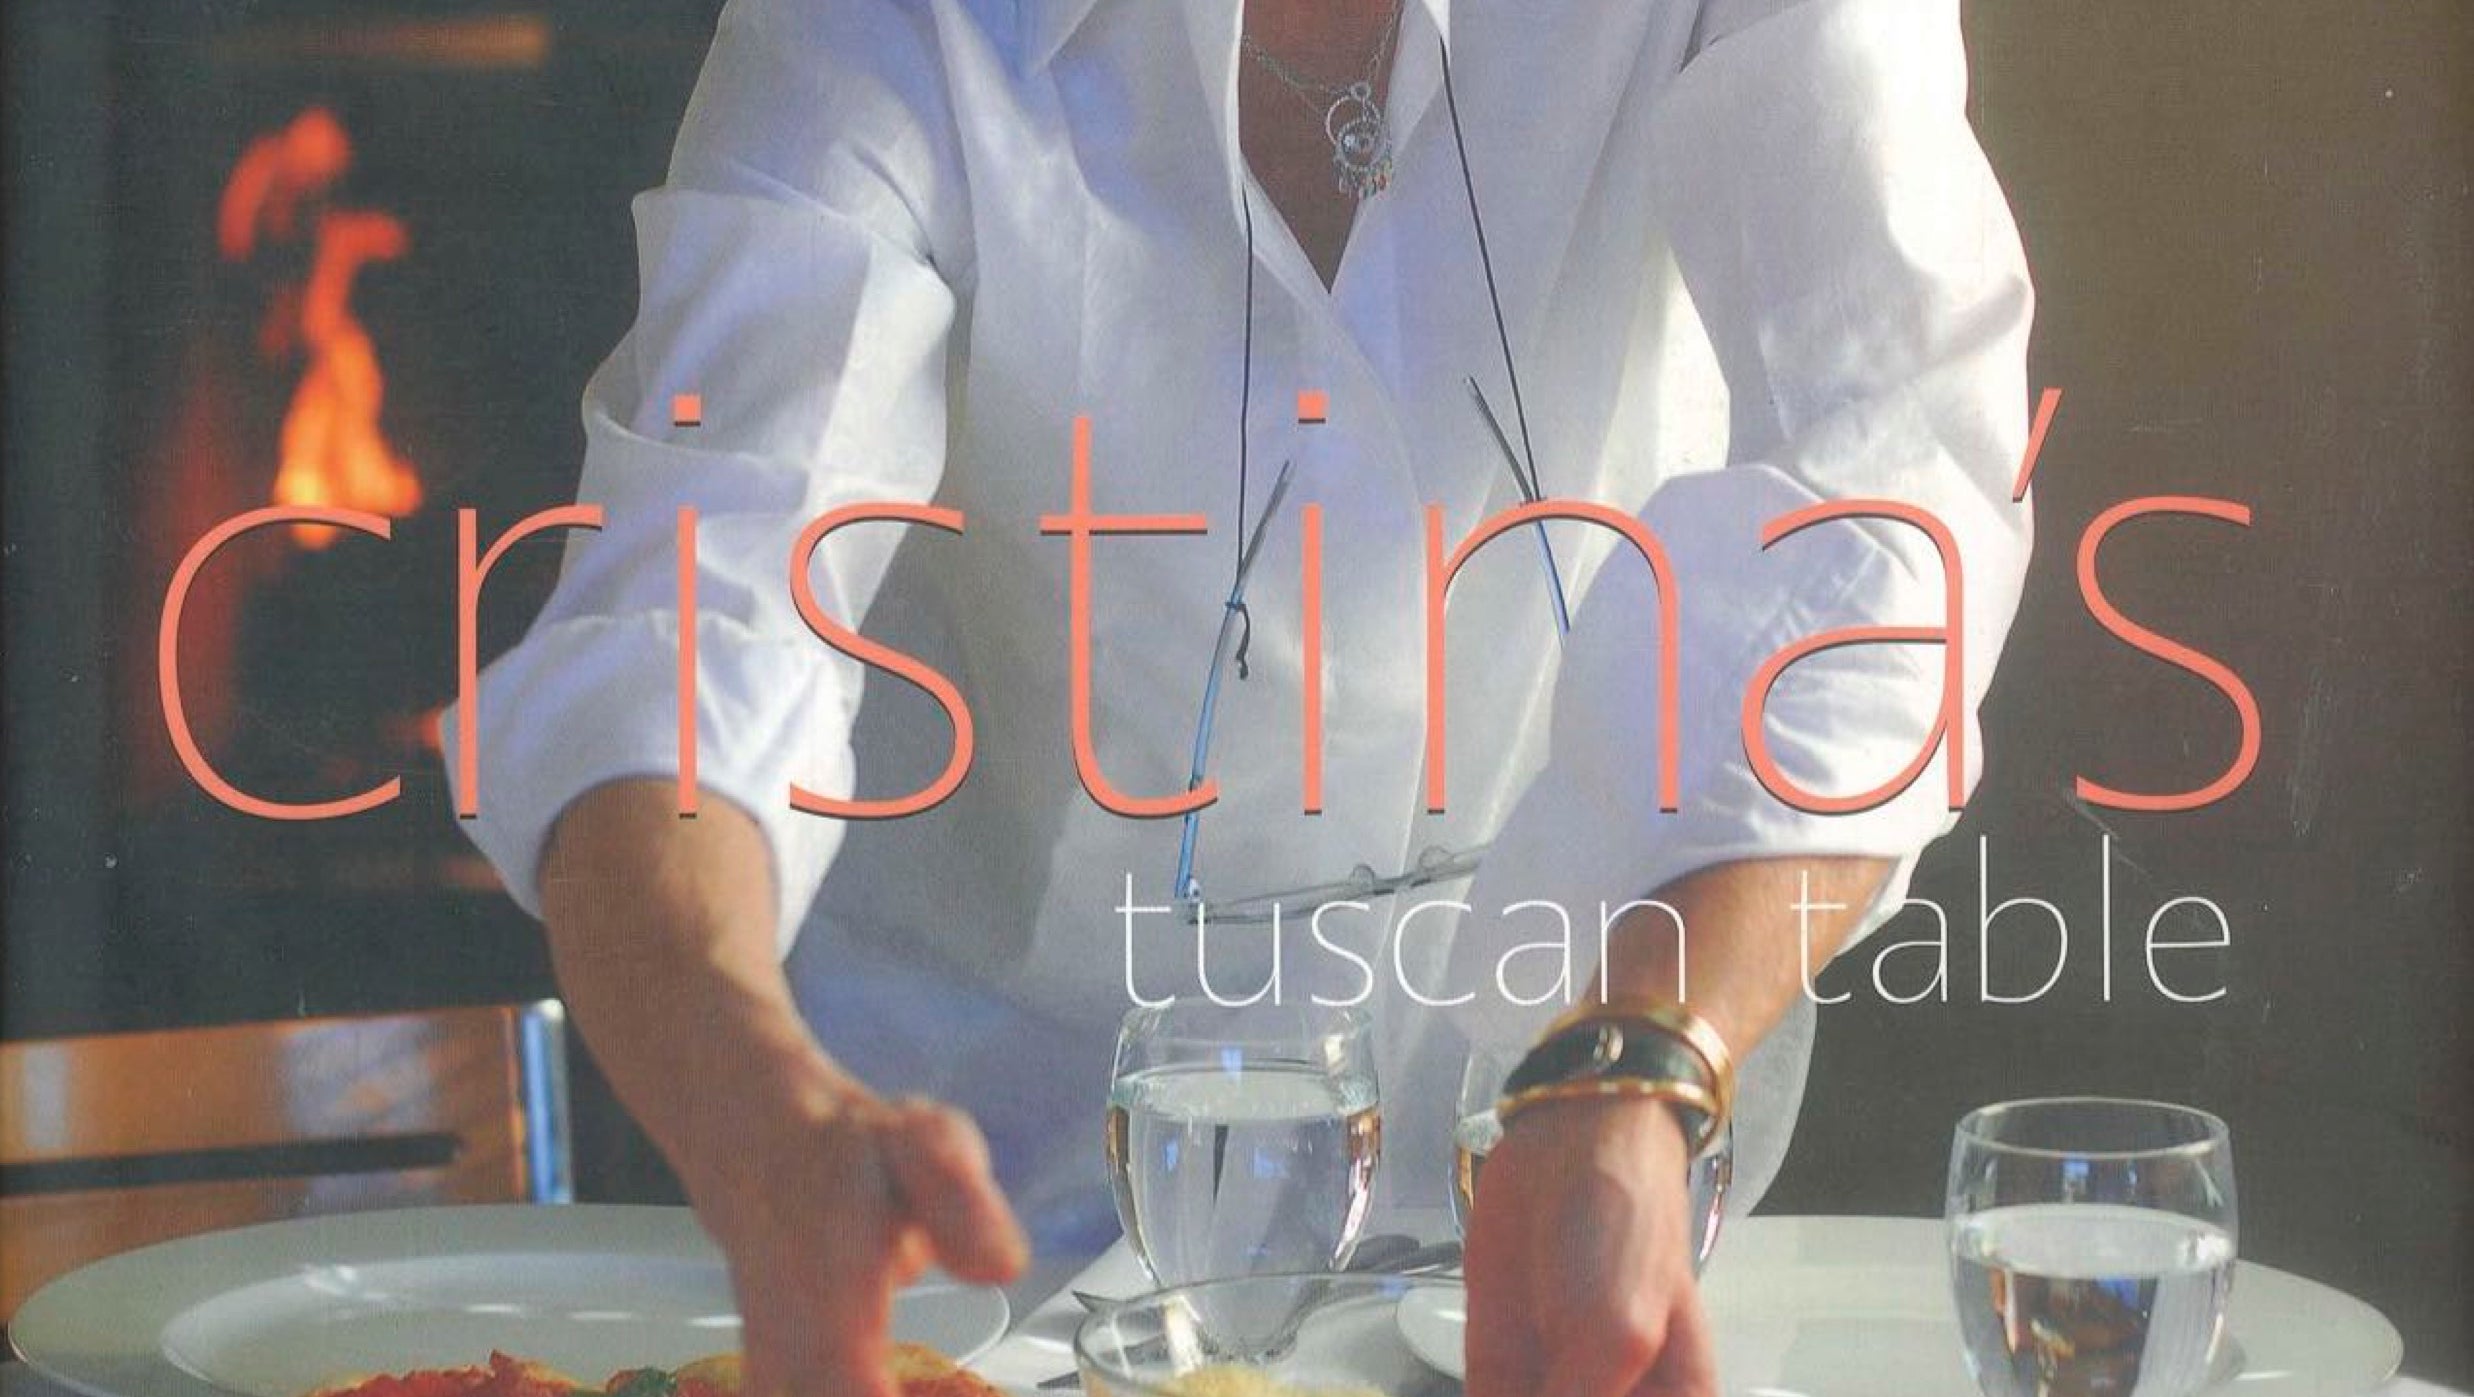 Fabbri pasta in Cristina’s tuscan table